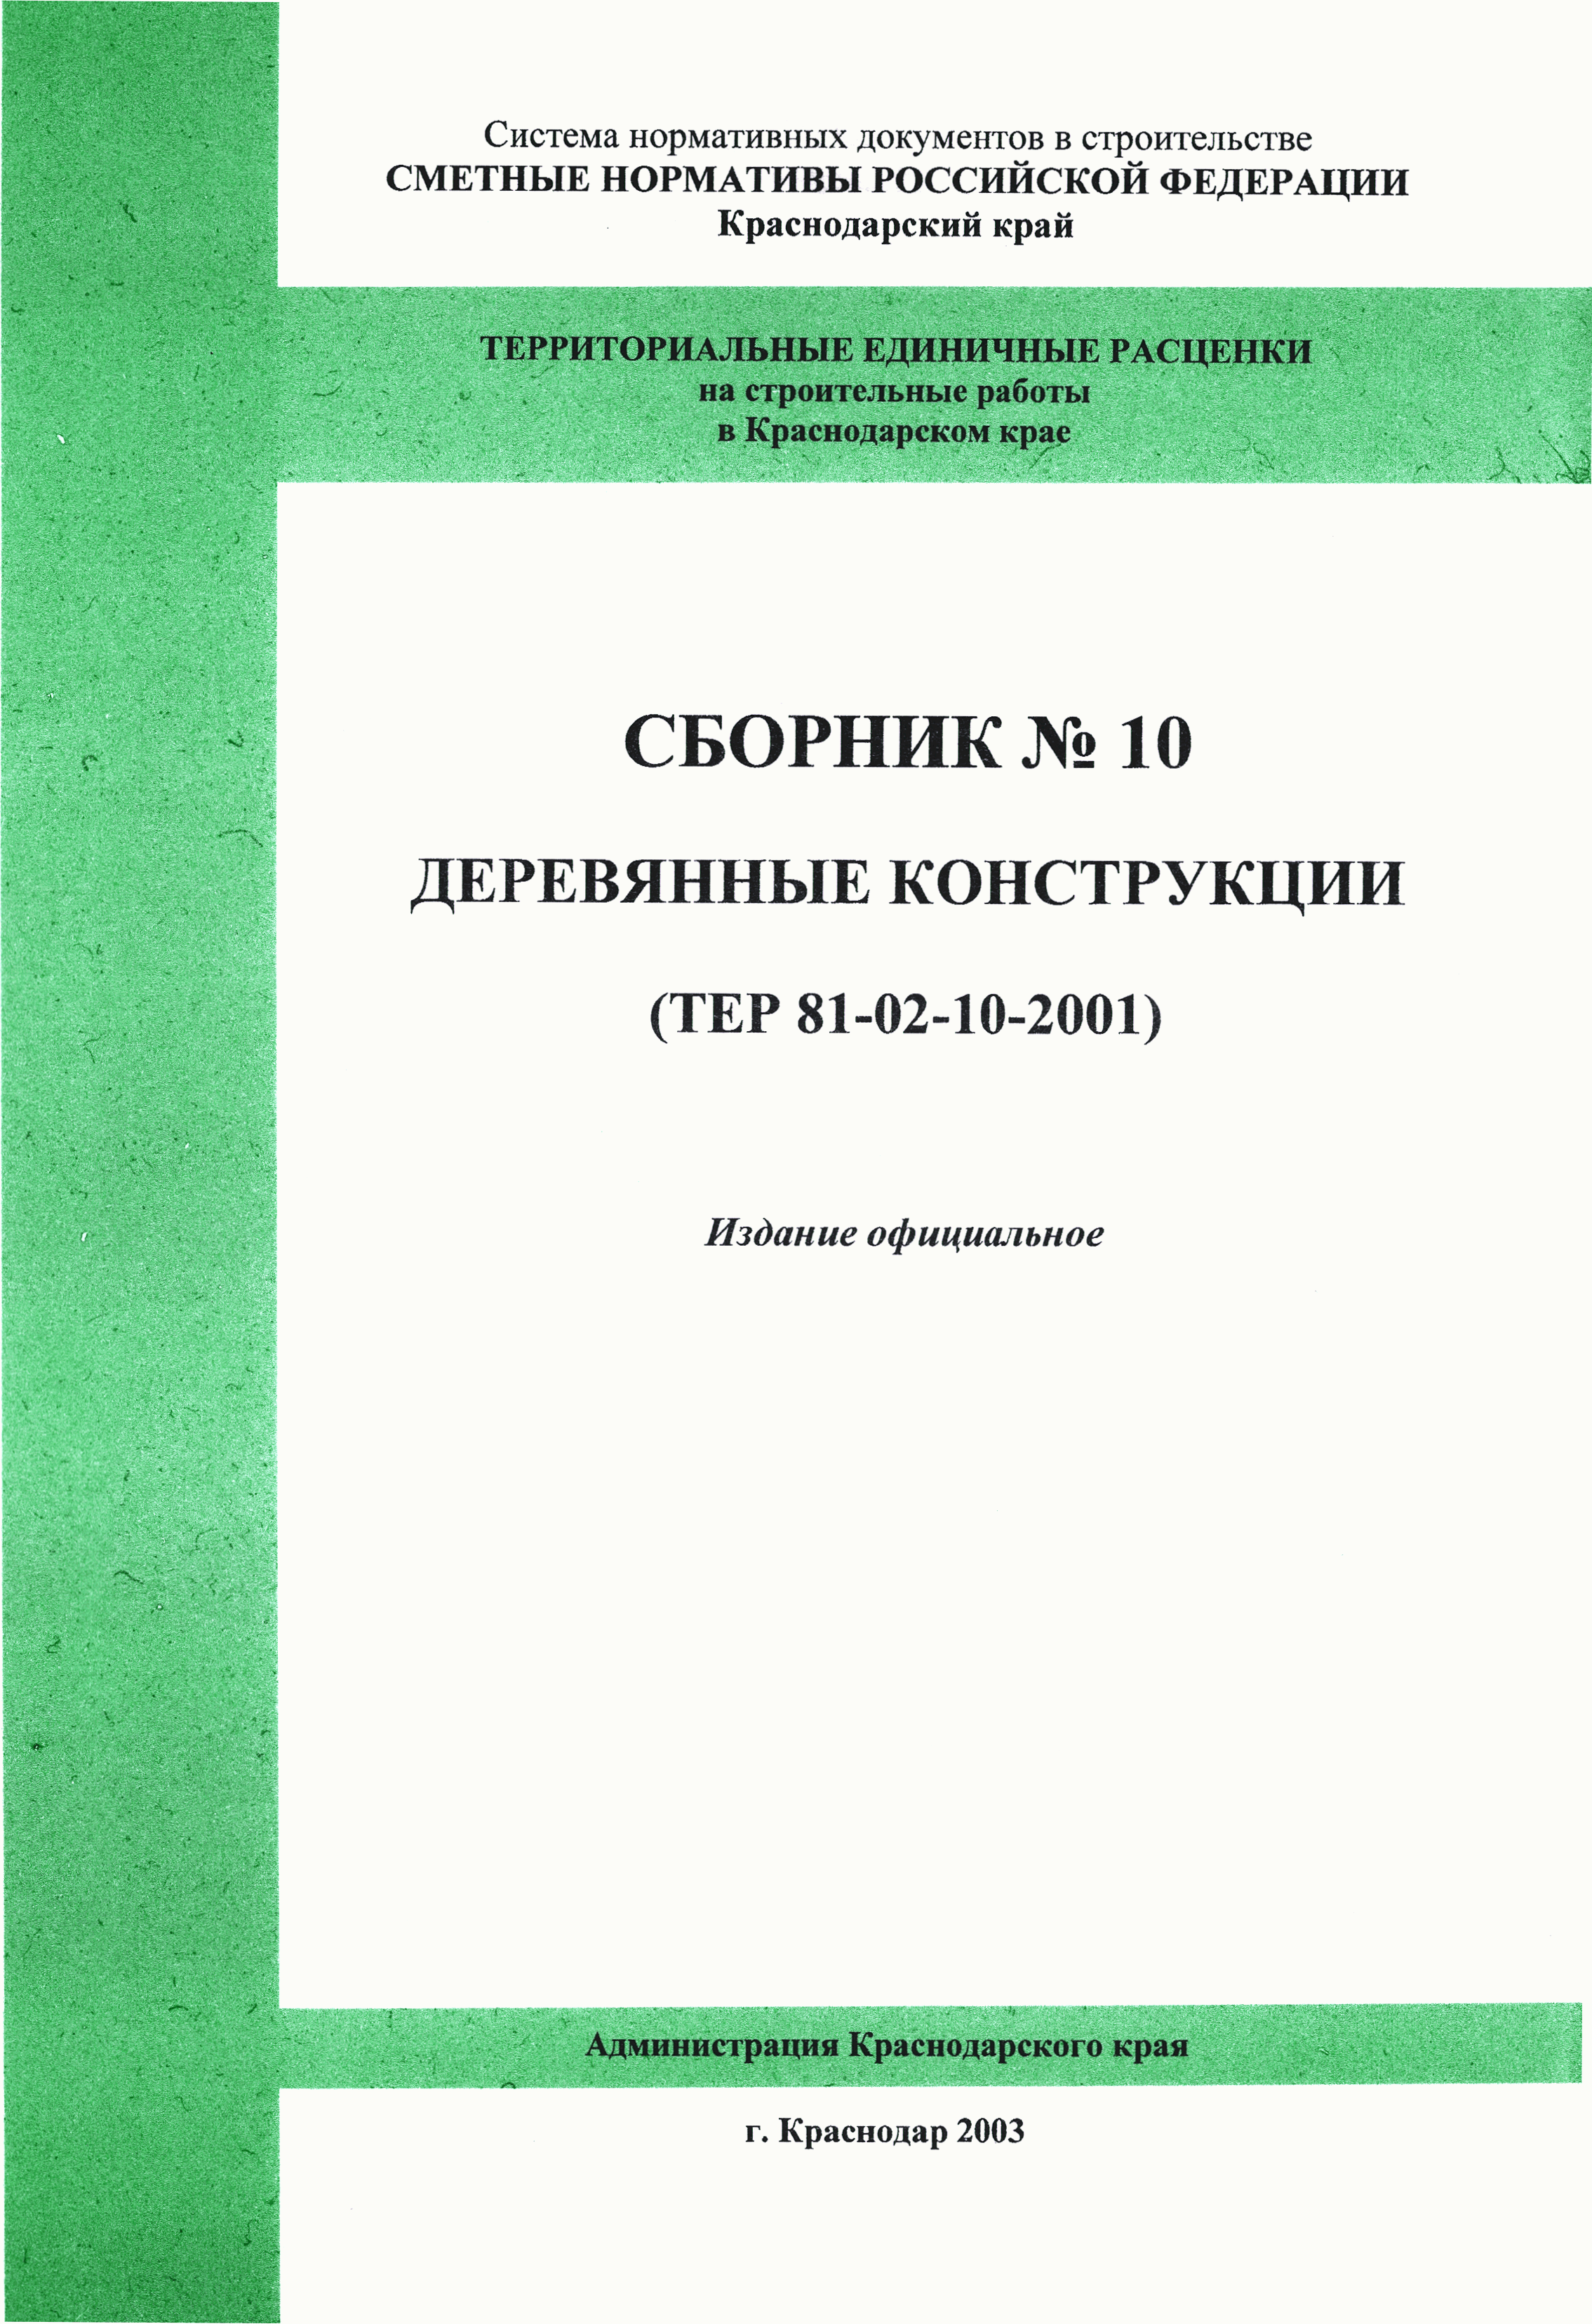 ТЕР Краснодарского края 2001-10